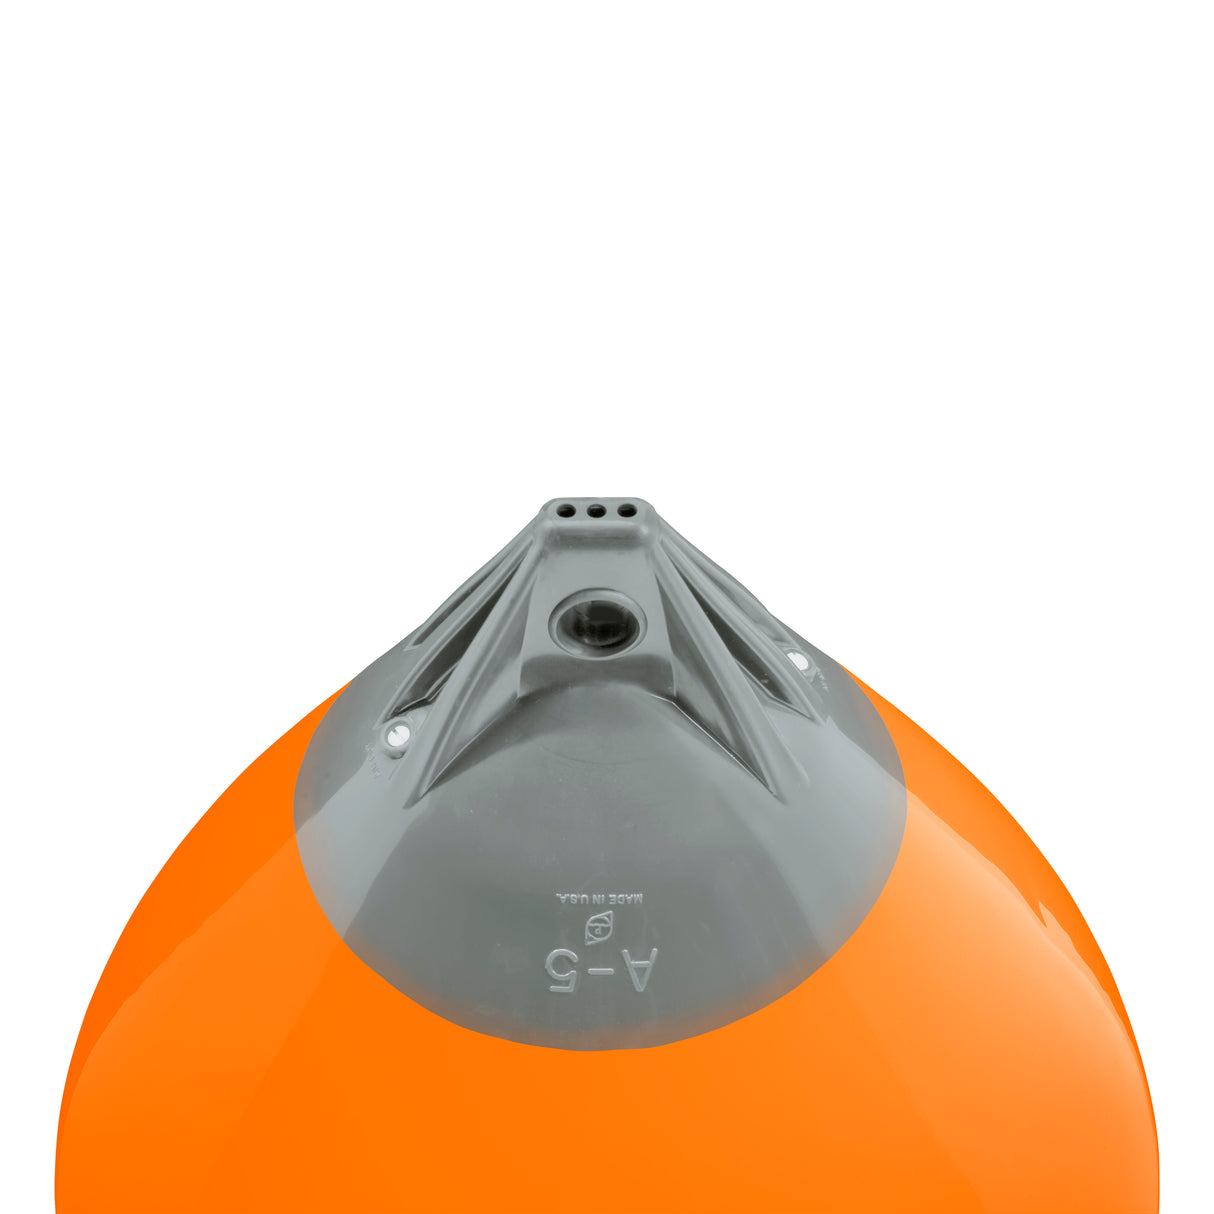 Orange buoy with Grey-Top, Polyform A-5 angled shot